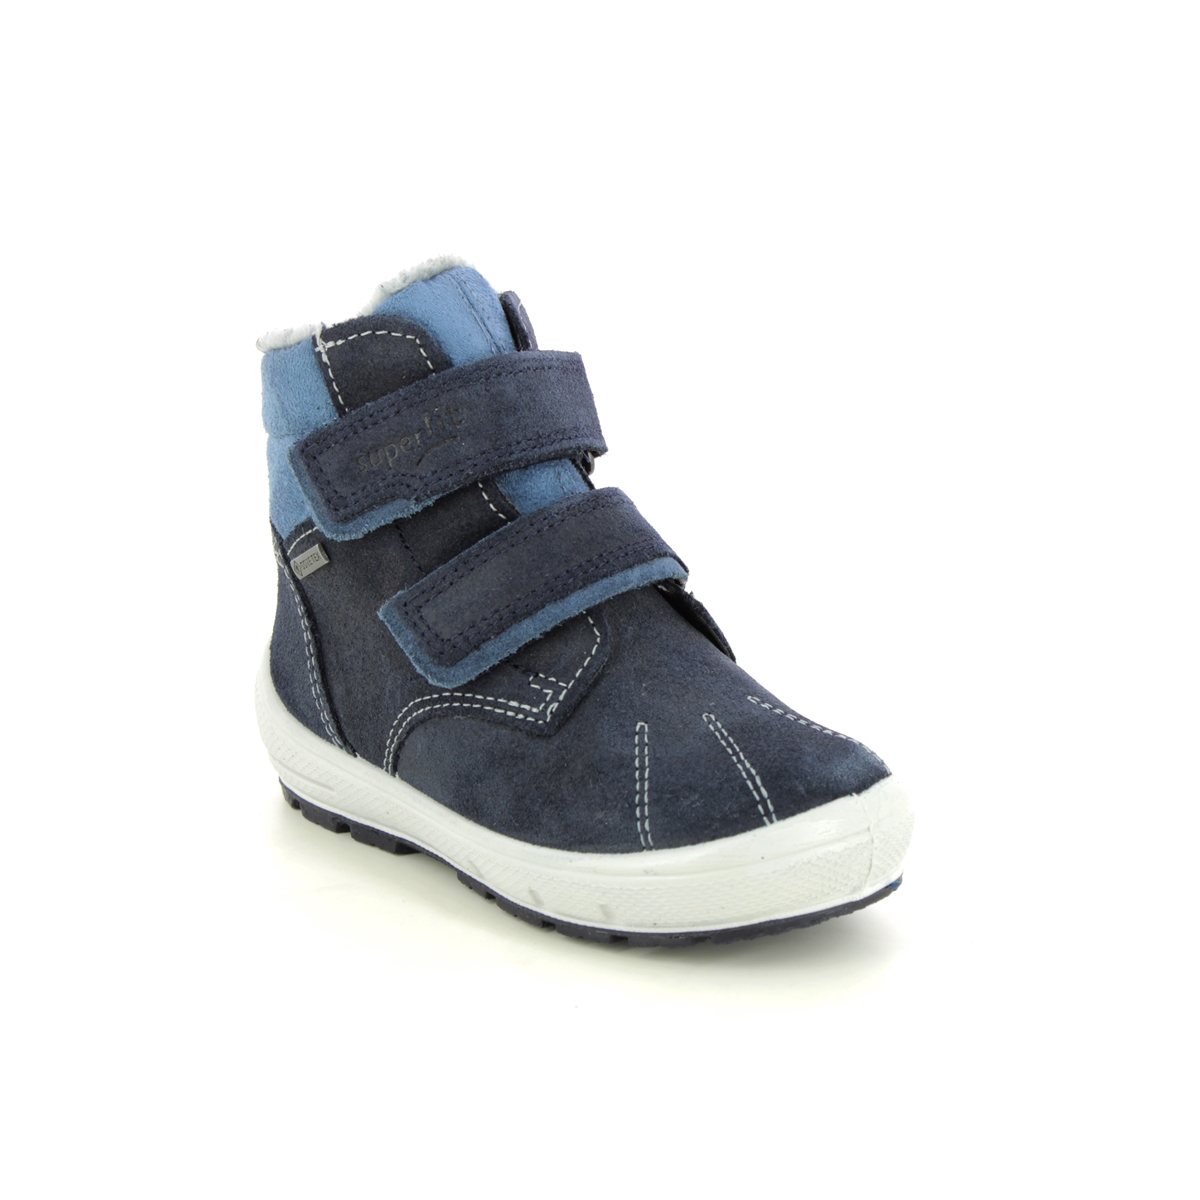 Superfit Groovy Gtx Navy Light Blue Kids Toddler Boys Boots 1006317-8000 In Size 23 In Plain Navy Light Blue